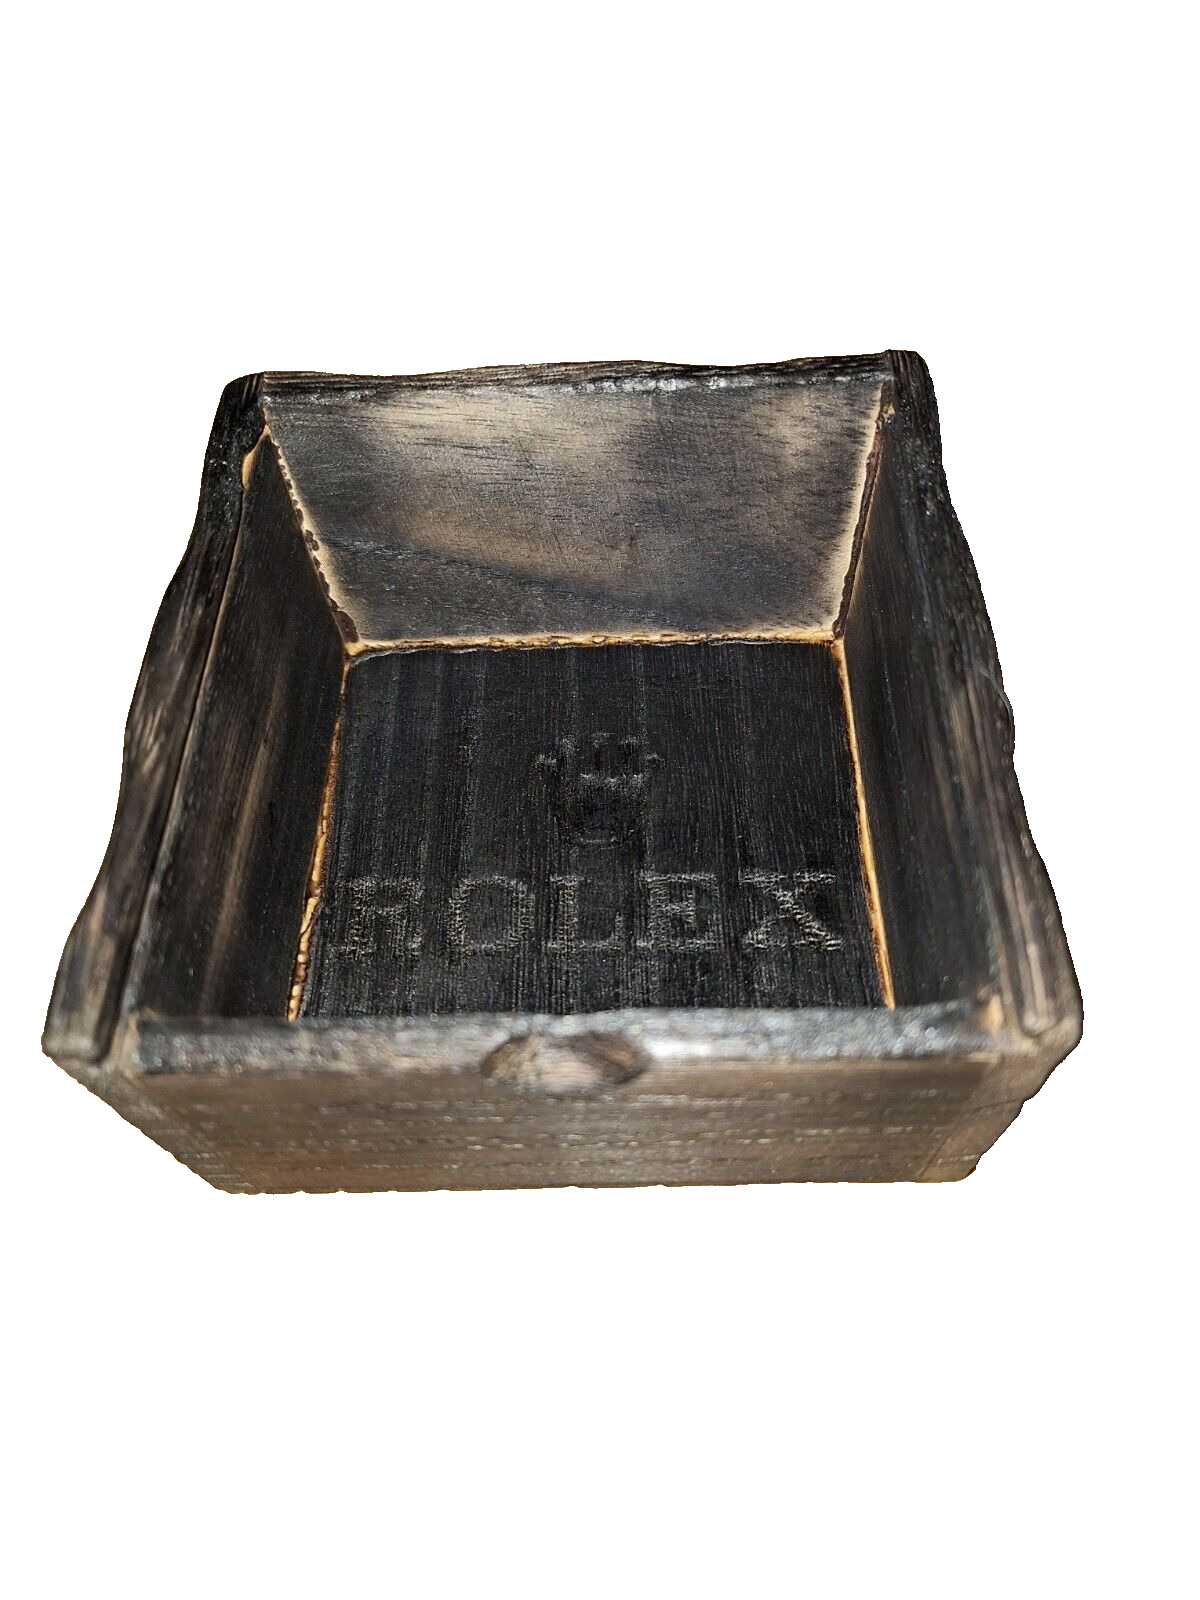 Antique Rolex Watch Box  VERY NICE AND RARE  Biel, Switzerland ; 1944th * HOT